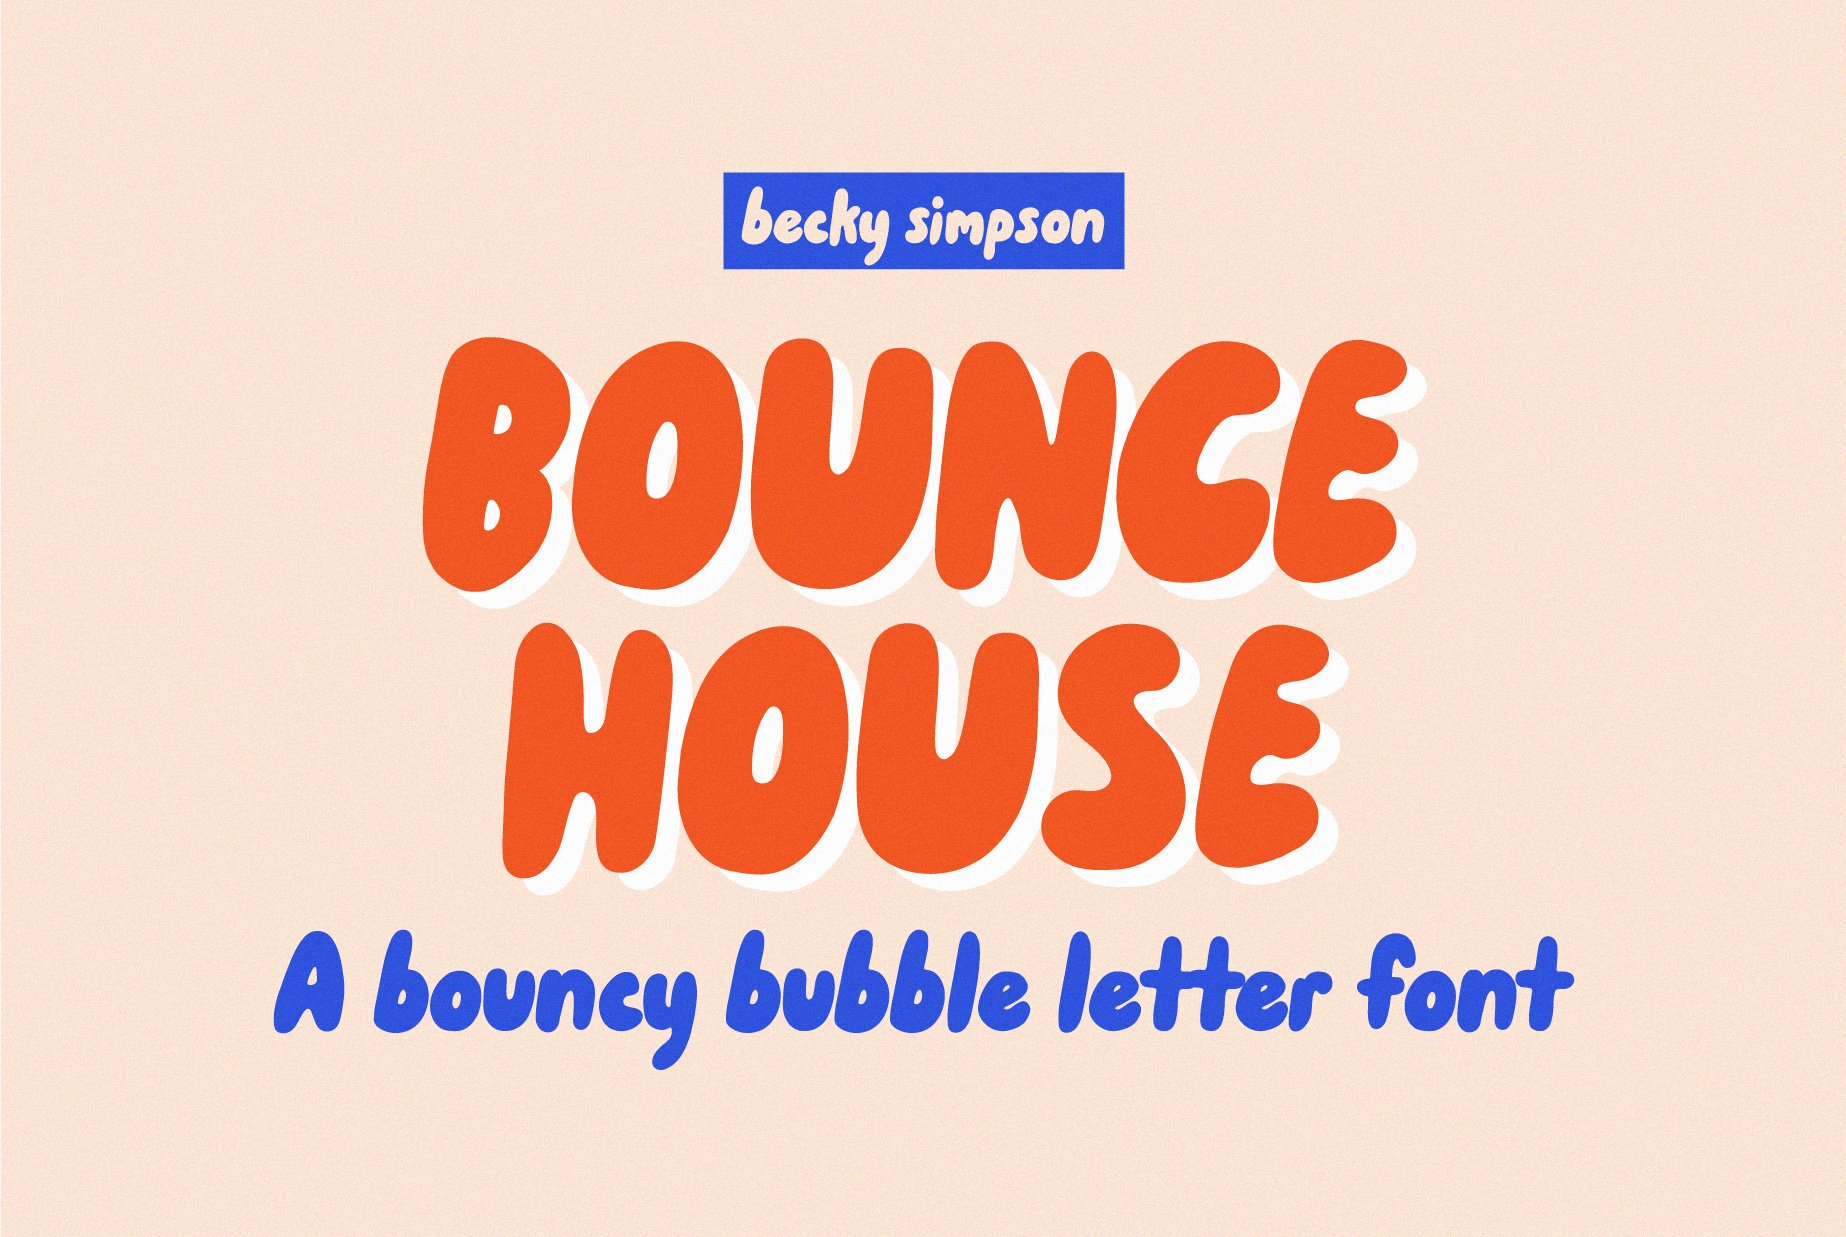 Bounce House • Bubble Letter font cover image.